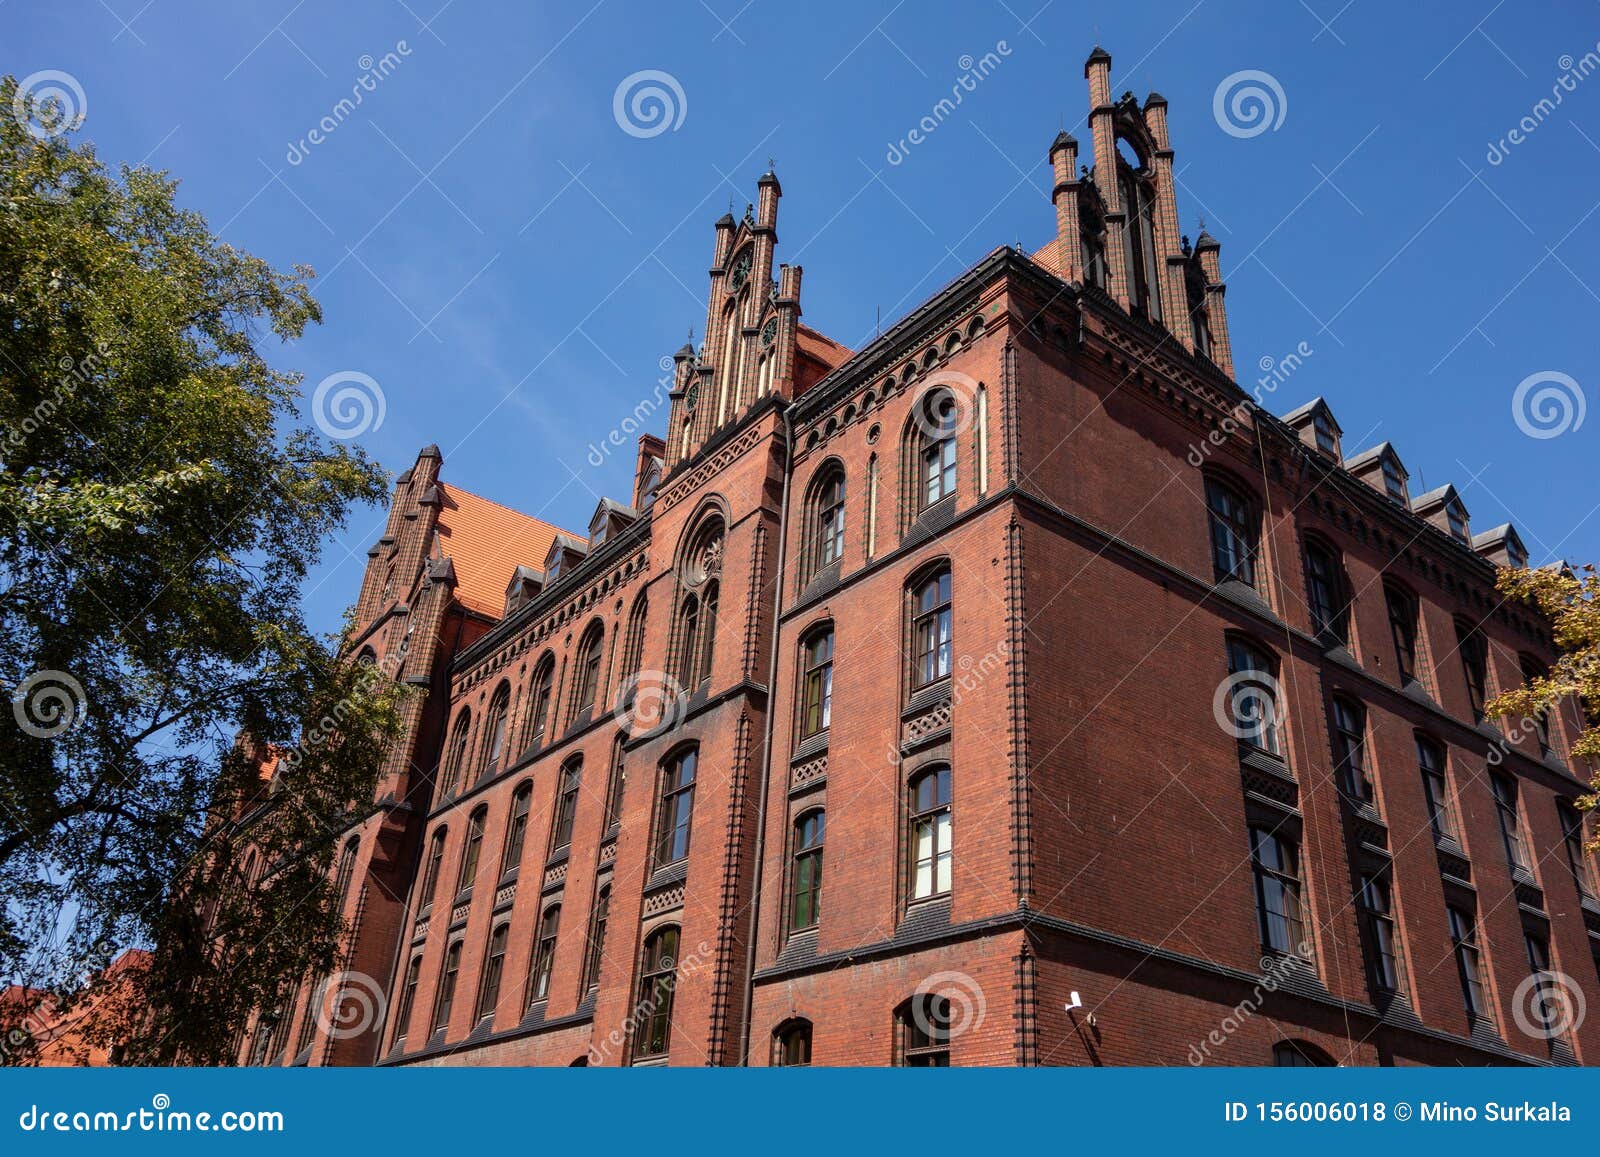 red brick historic building of metropolitan seminary metropolitalne wyÃÂ¼sze seminarium duchowne in wroclaw